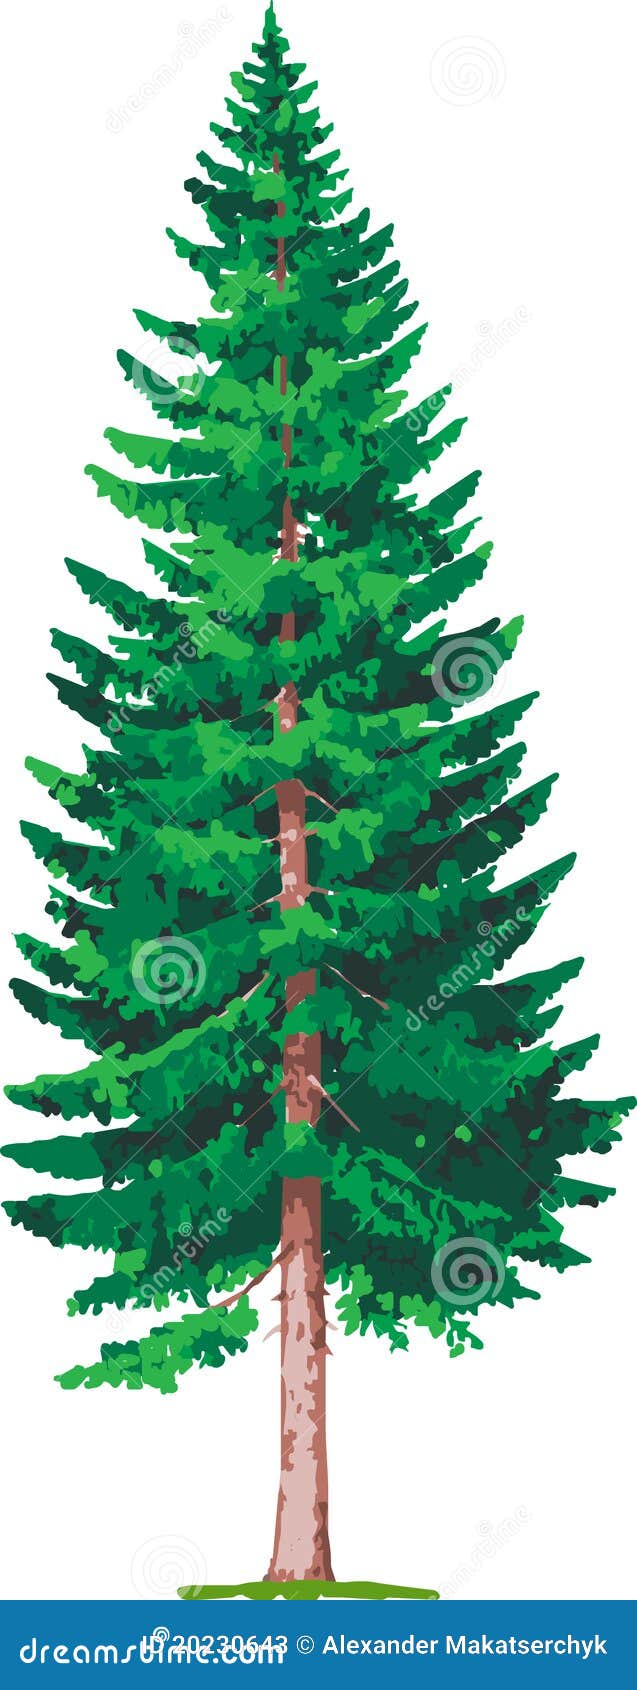 clipart spruce tree - photo #43